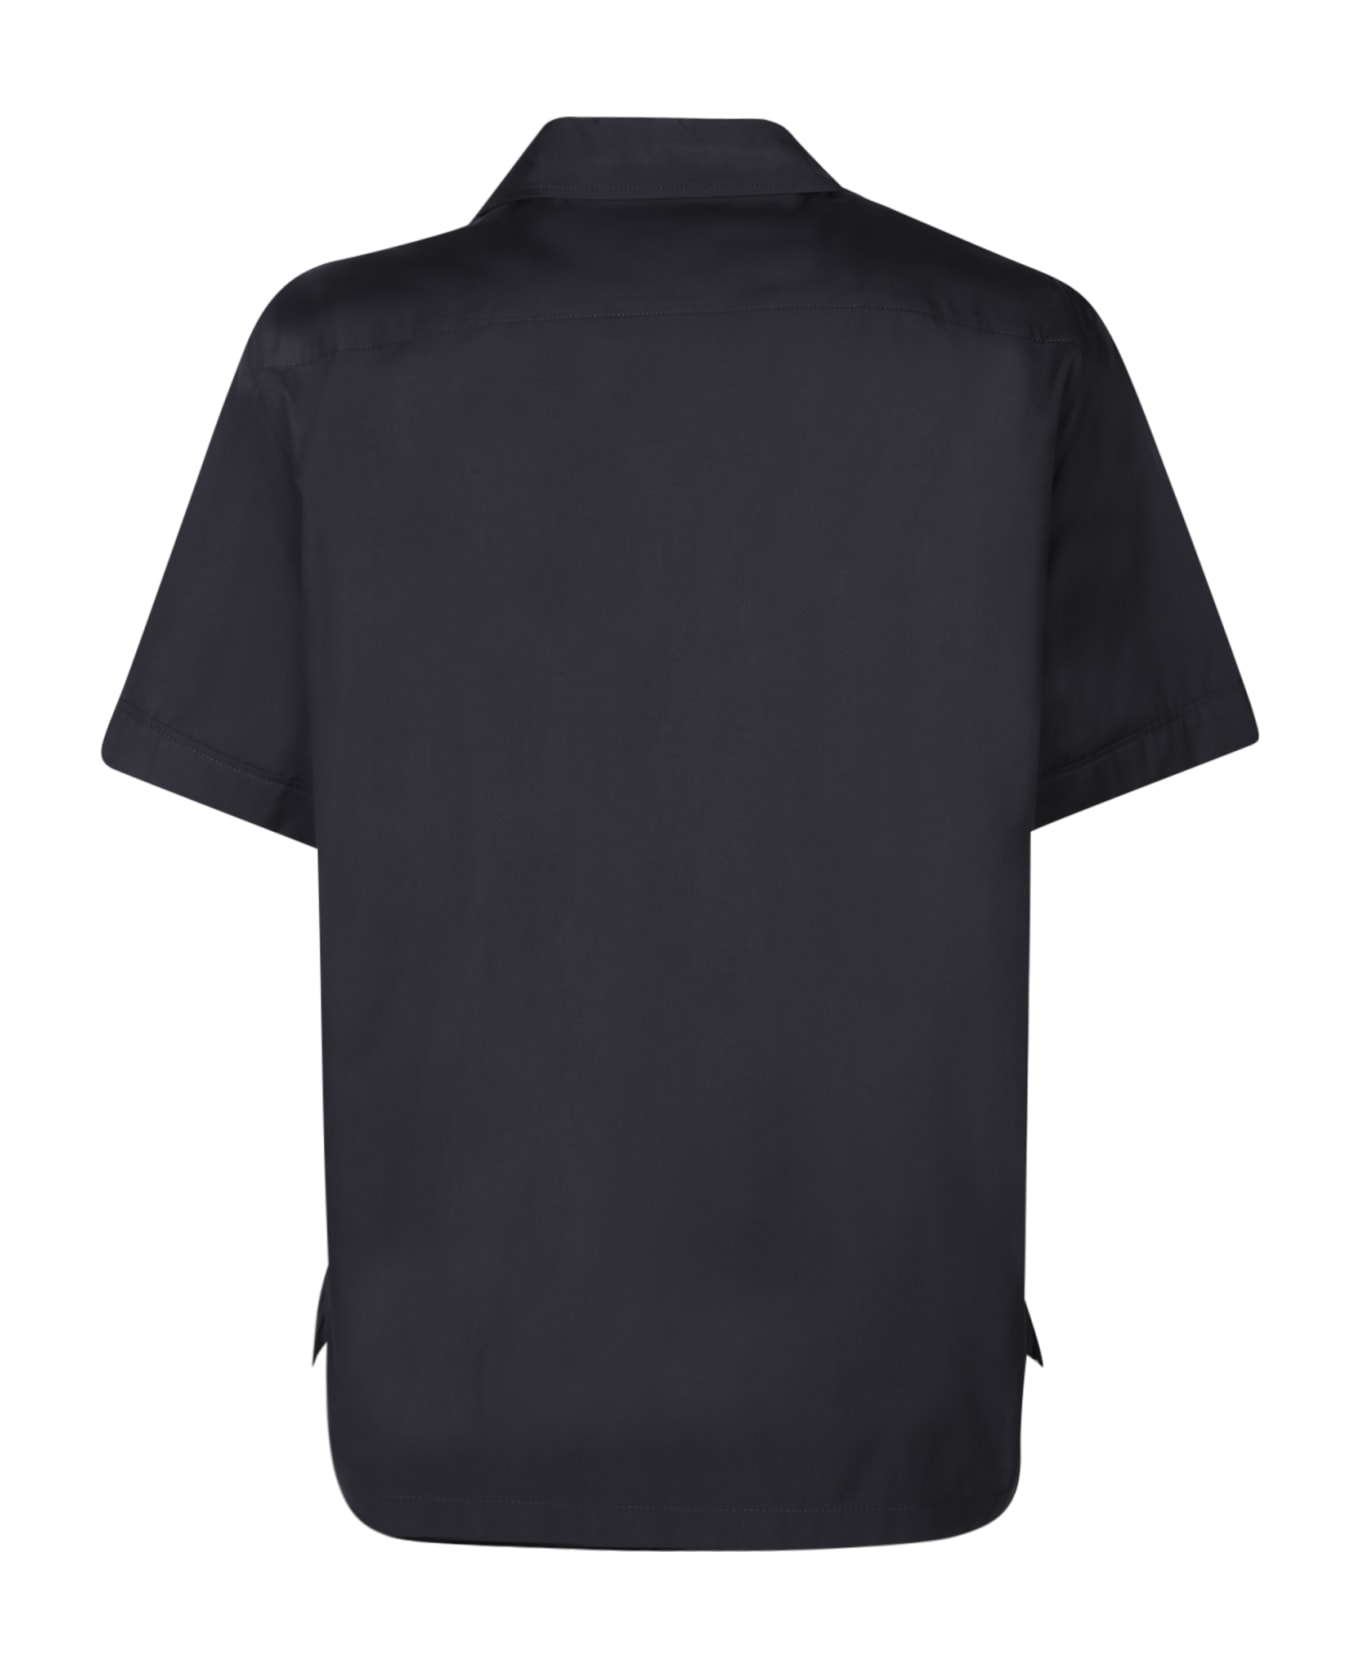 Dolce & Gabbana Essential Black Shirt - Black